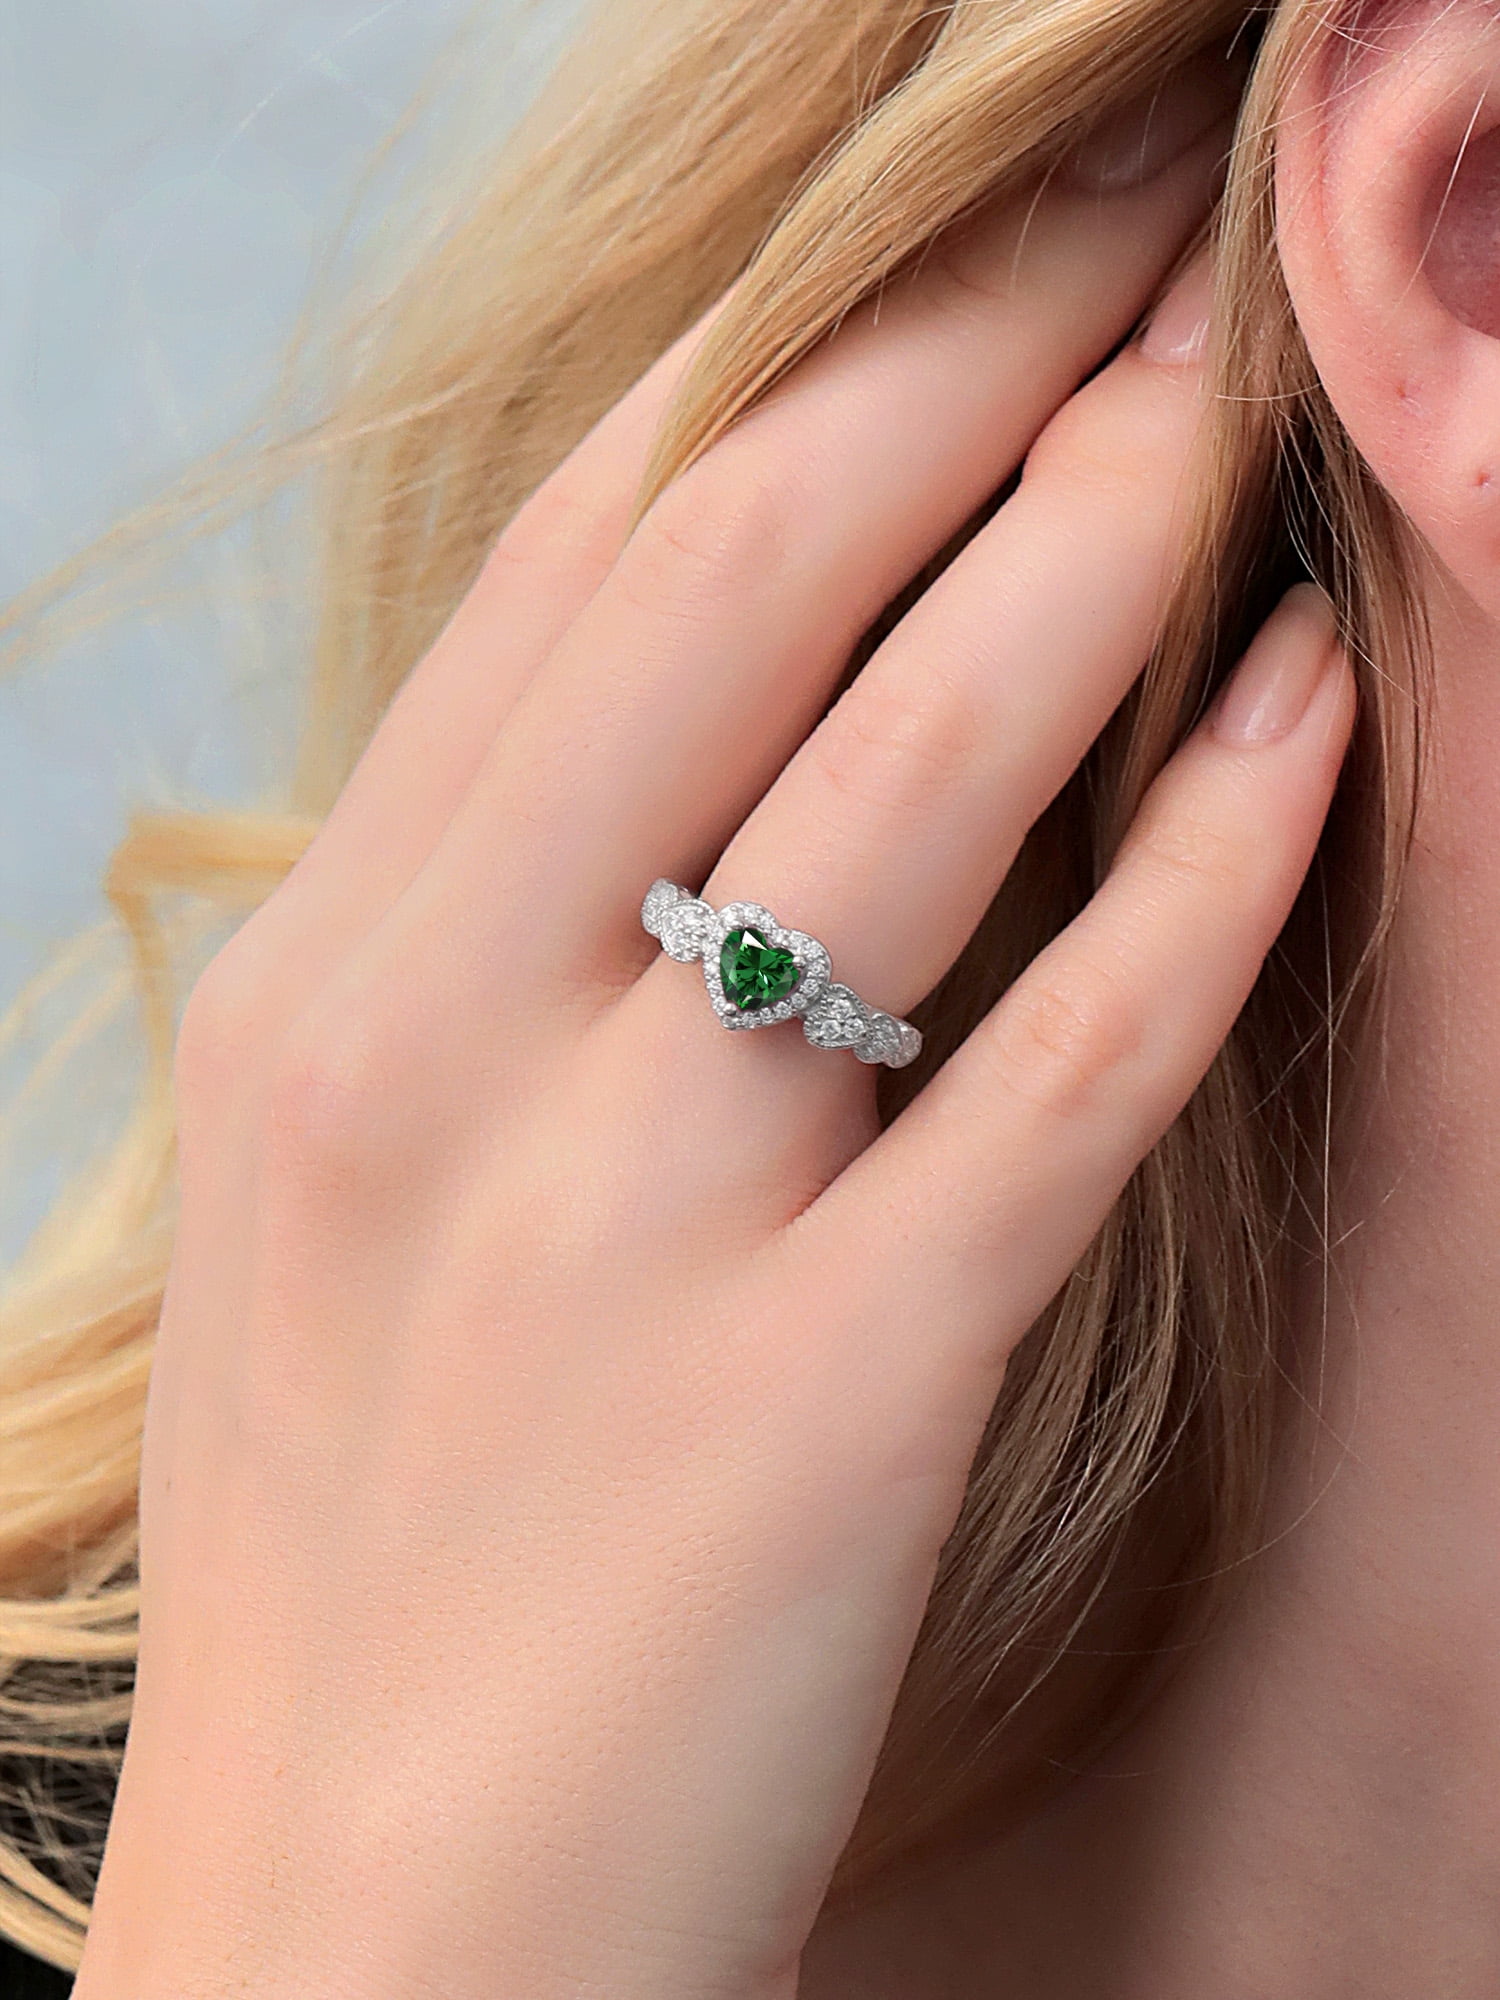 Buy 925 Silver Green Zircon Stone Finger Ring for Men and Boys